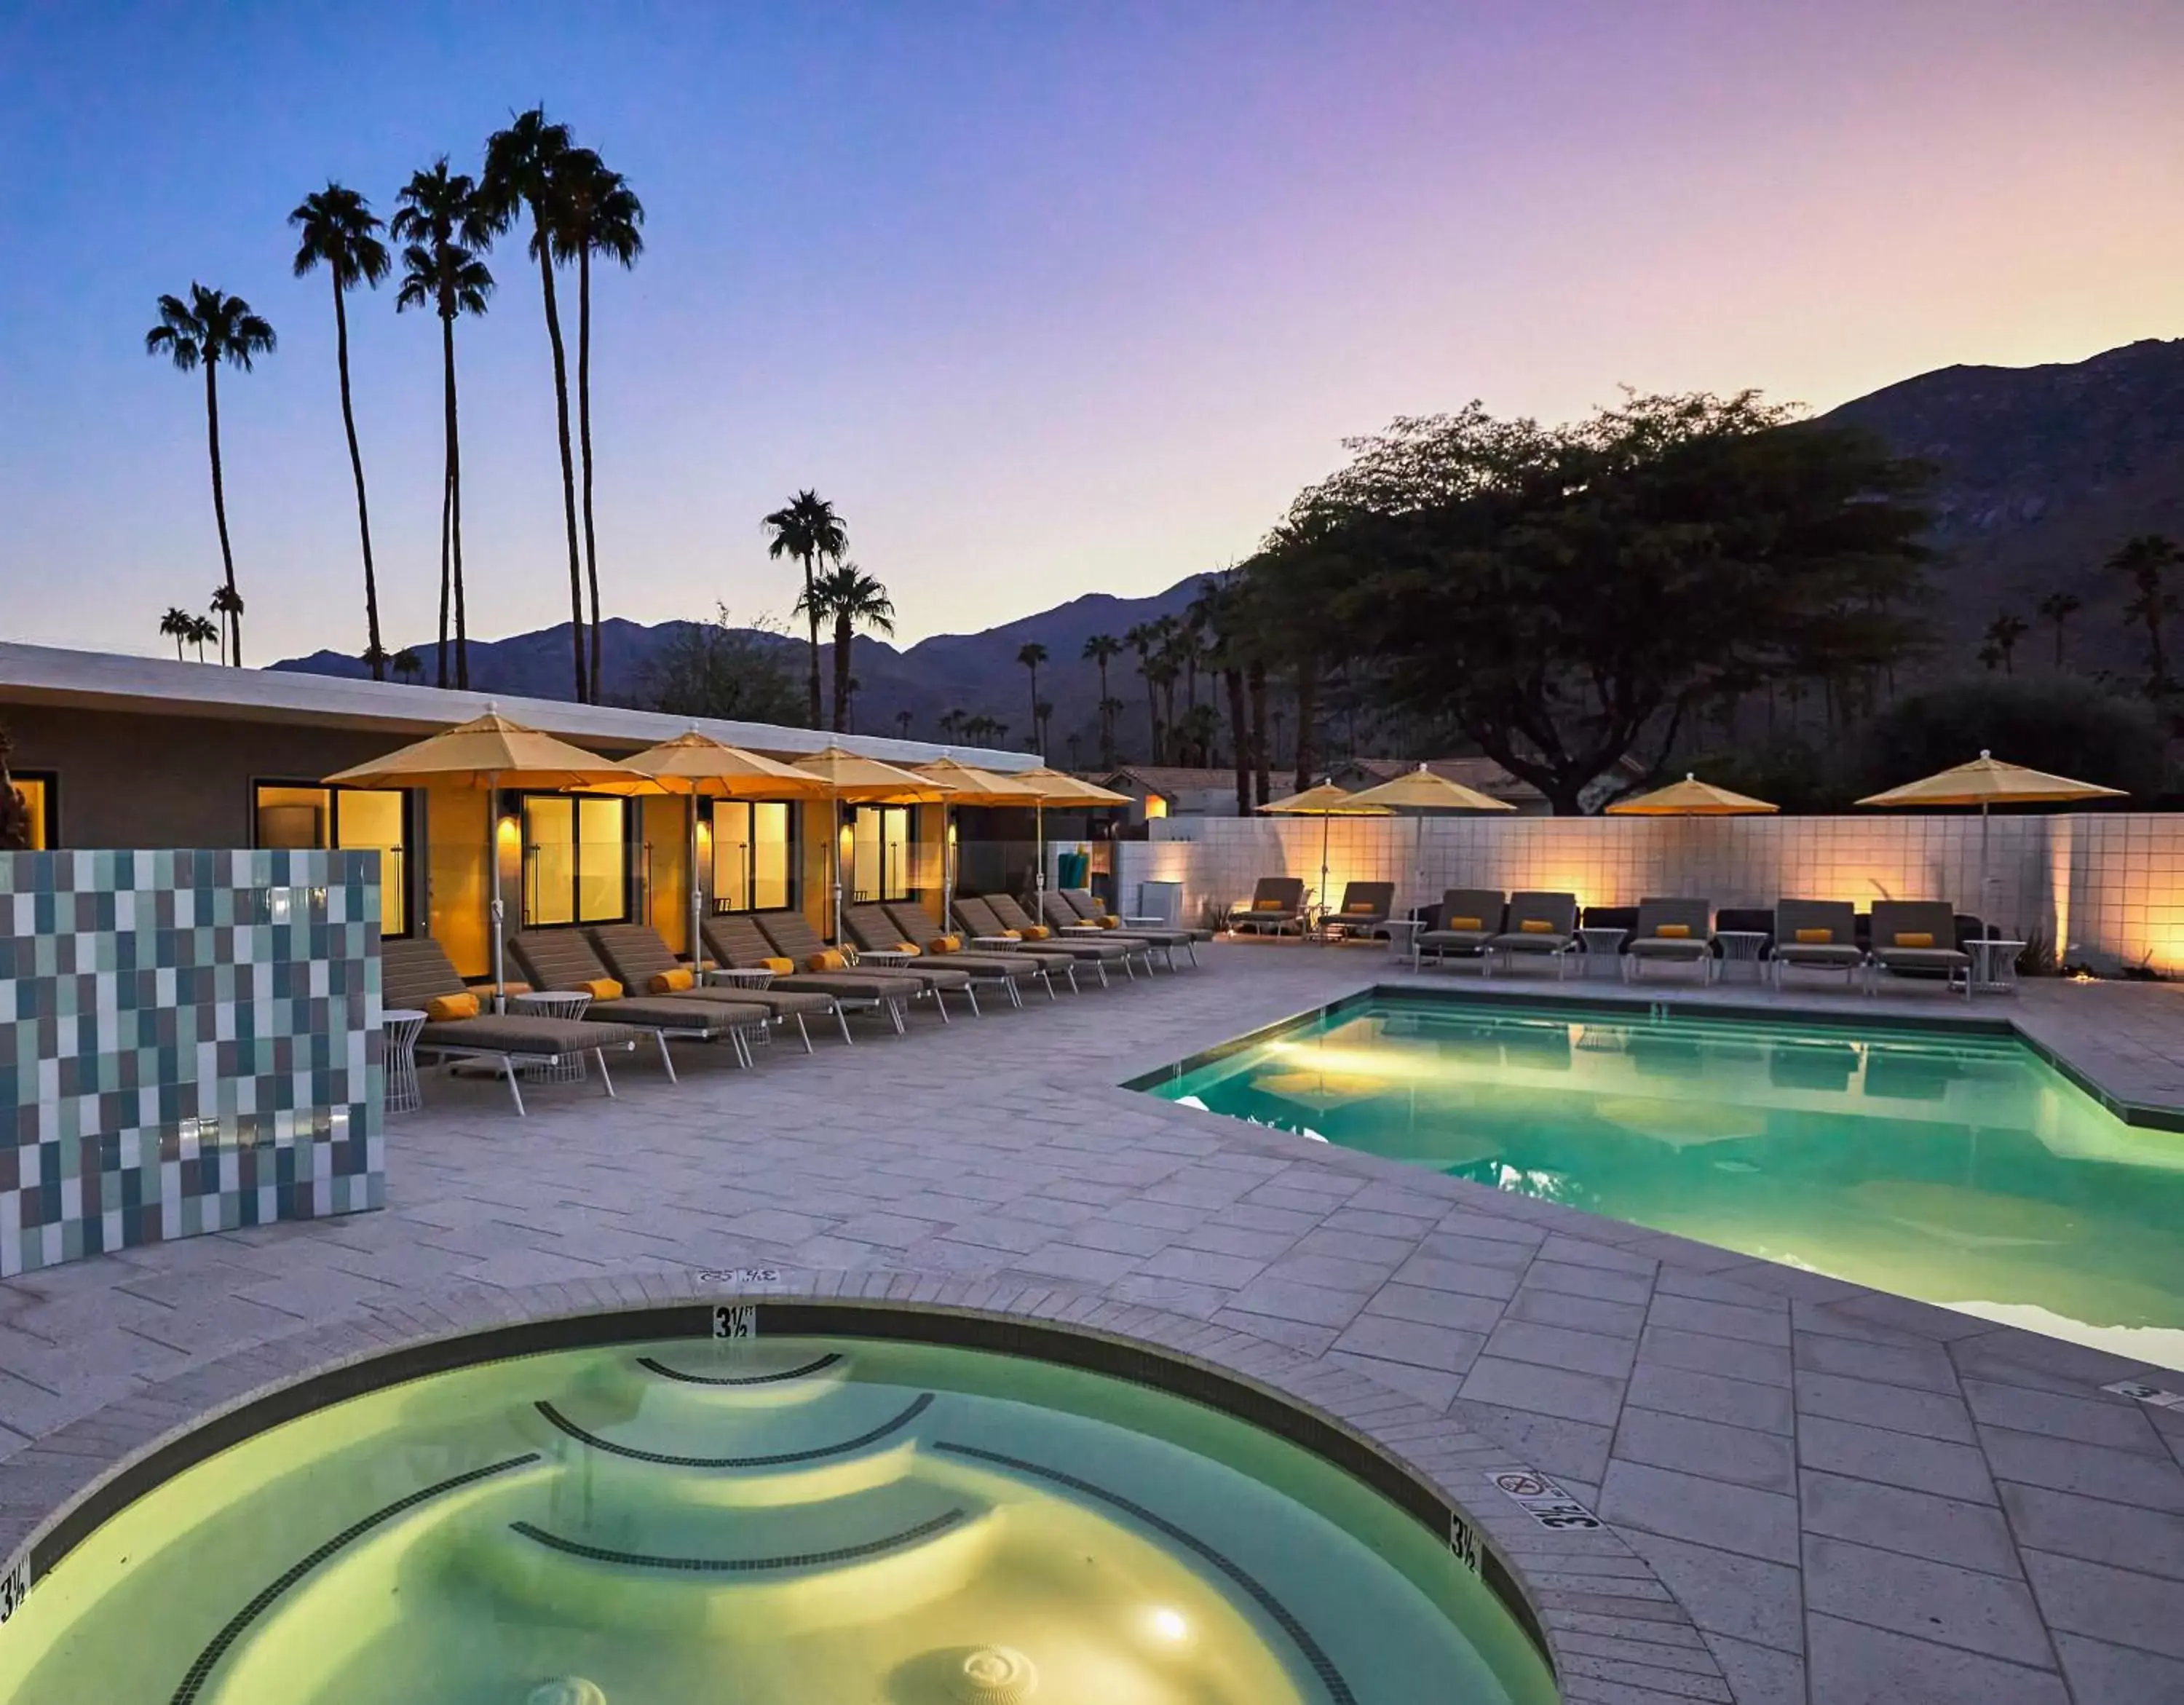 Night, Swimming Pool in Twin Palms Resort - Palm Springs Newest Gay Men's Resort